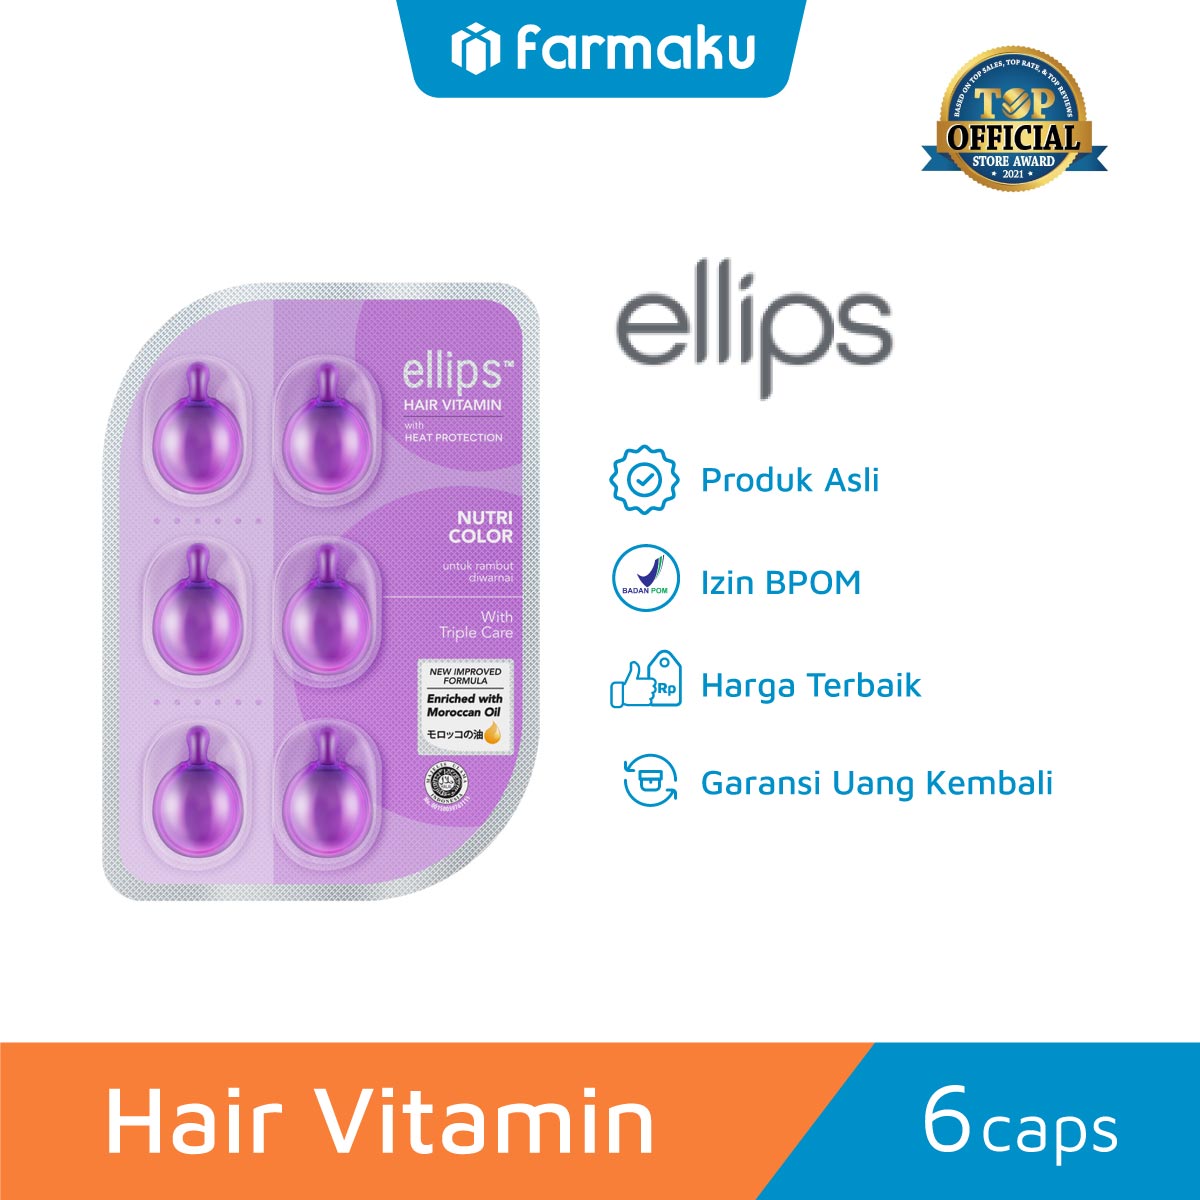 Ellips Hair Vitamin Nutri Color